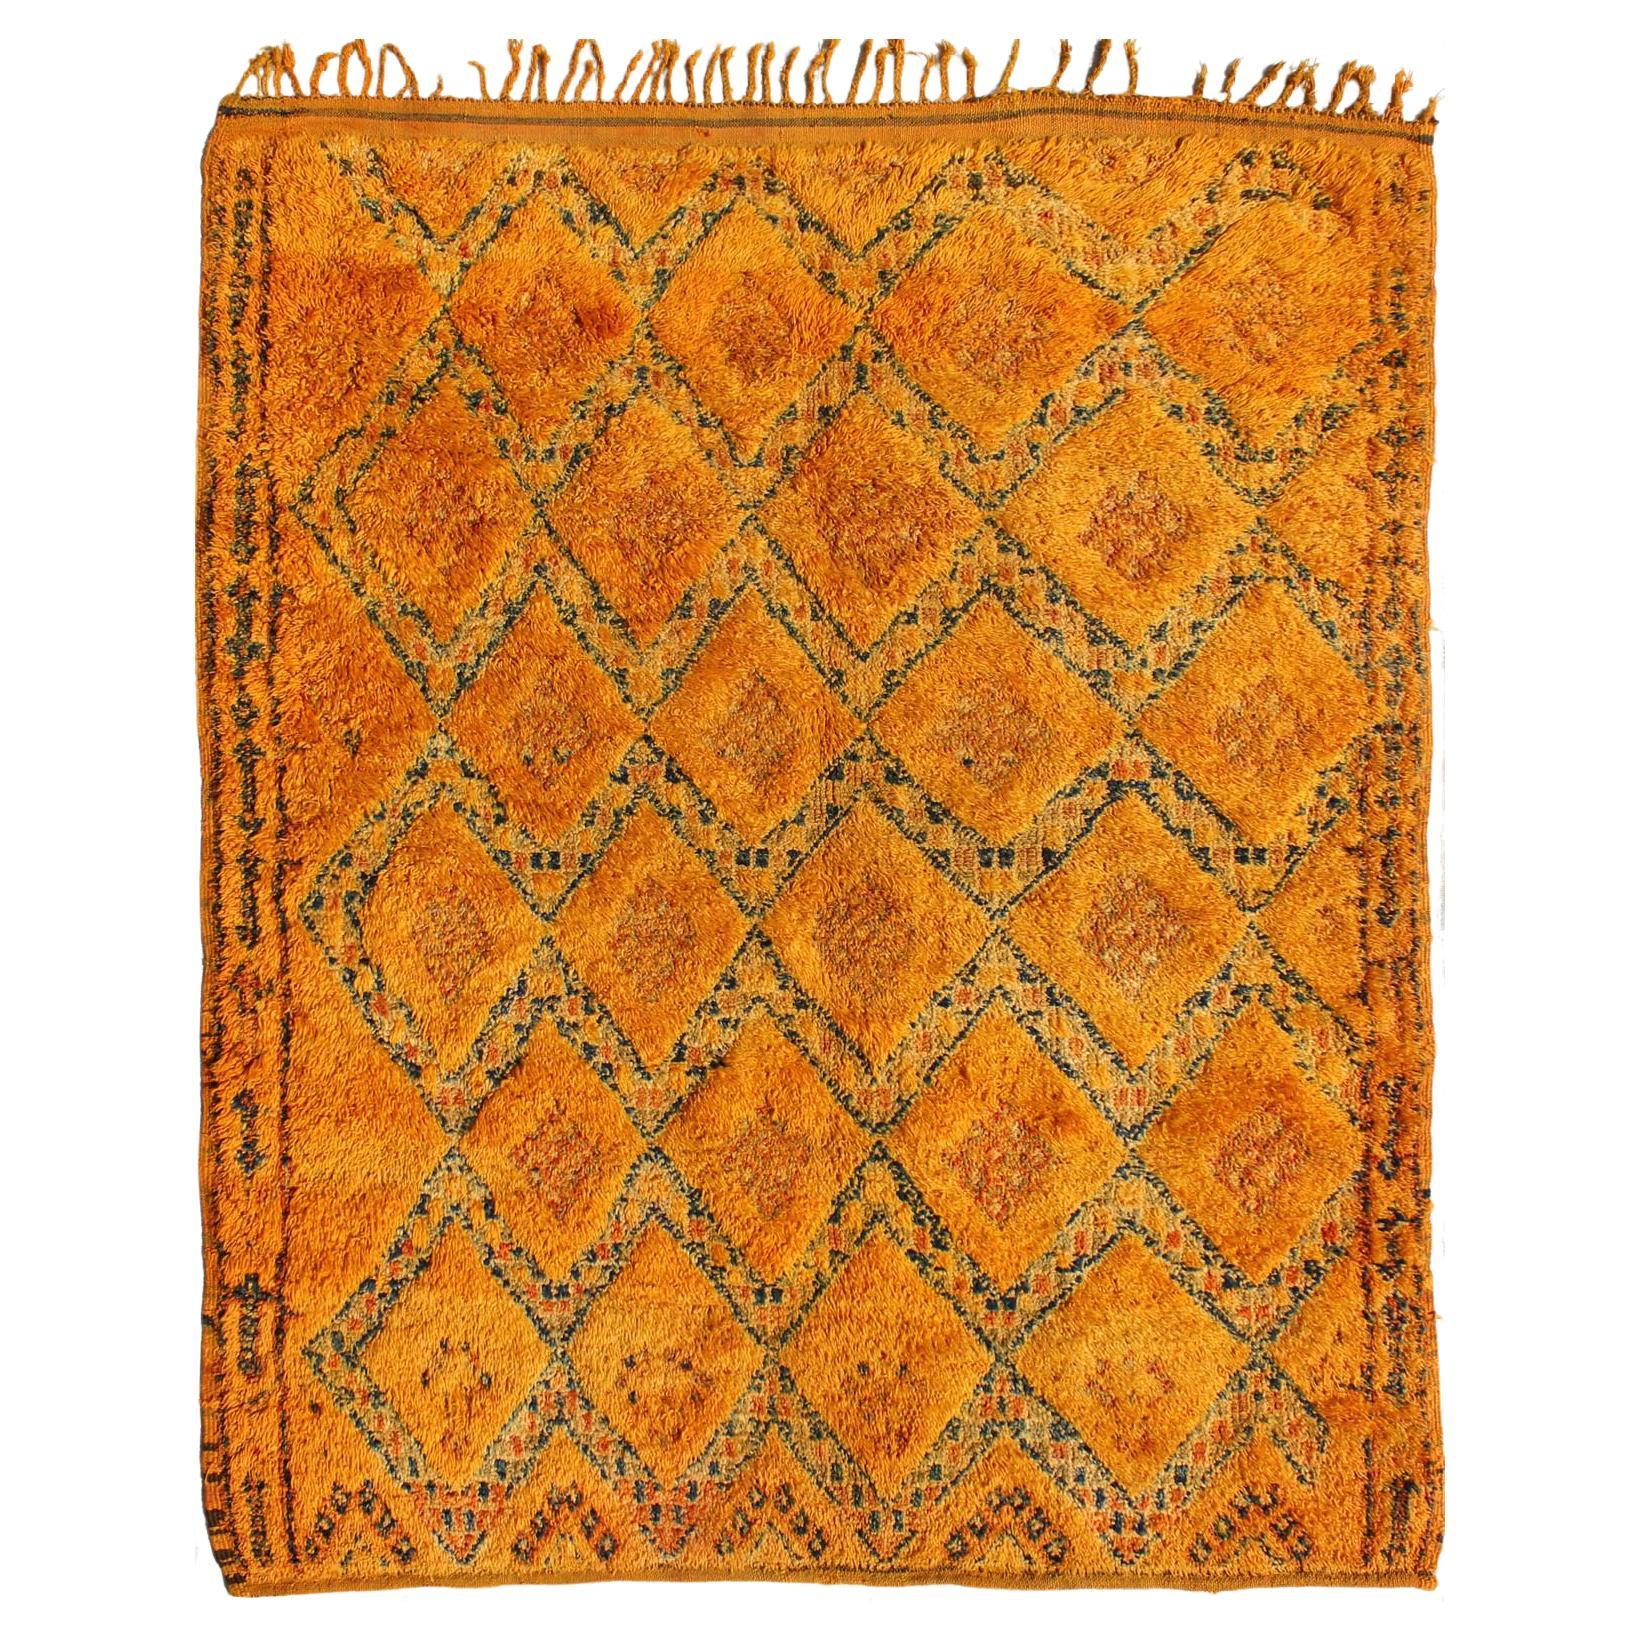 Saffron Colored Antique Moroccan Carpet with Geometric and Diamond Pattern For Sale